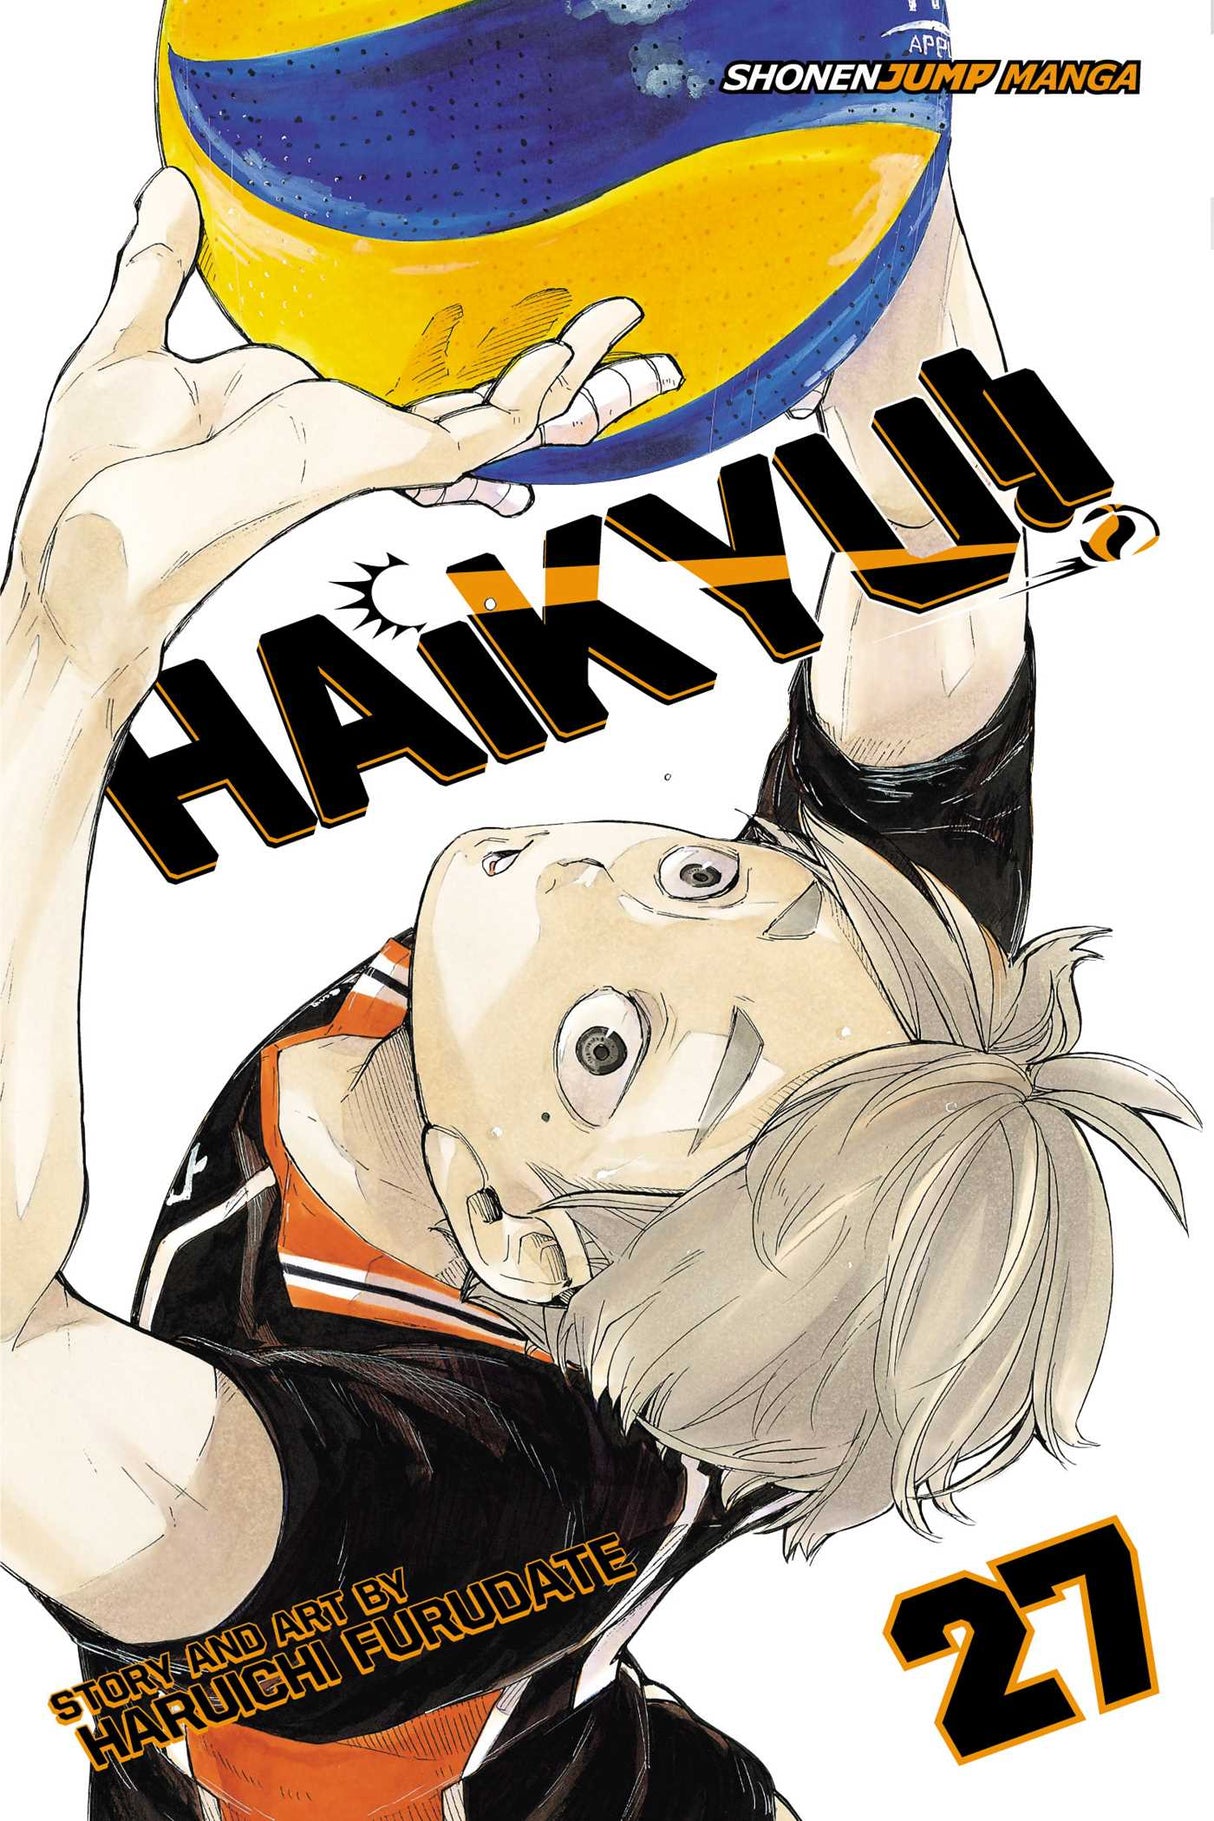 Cover image of the Manga Haikyu!!, Vol. 27